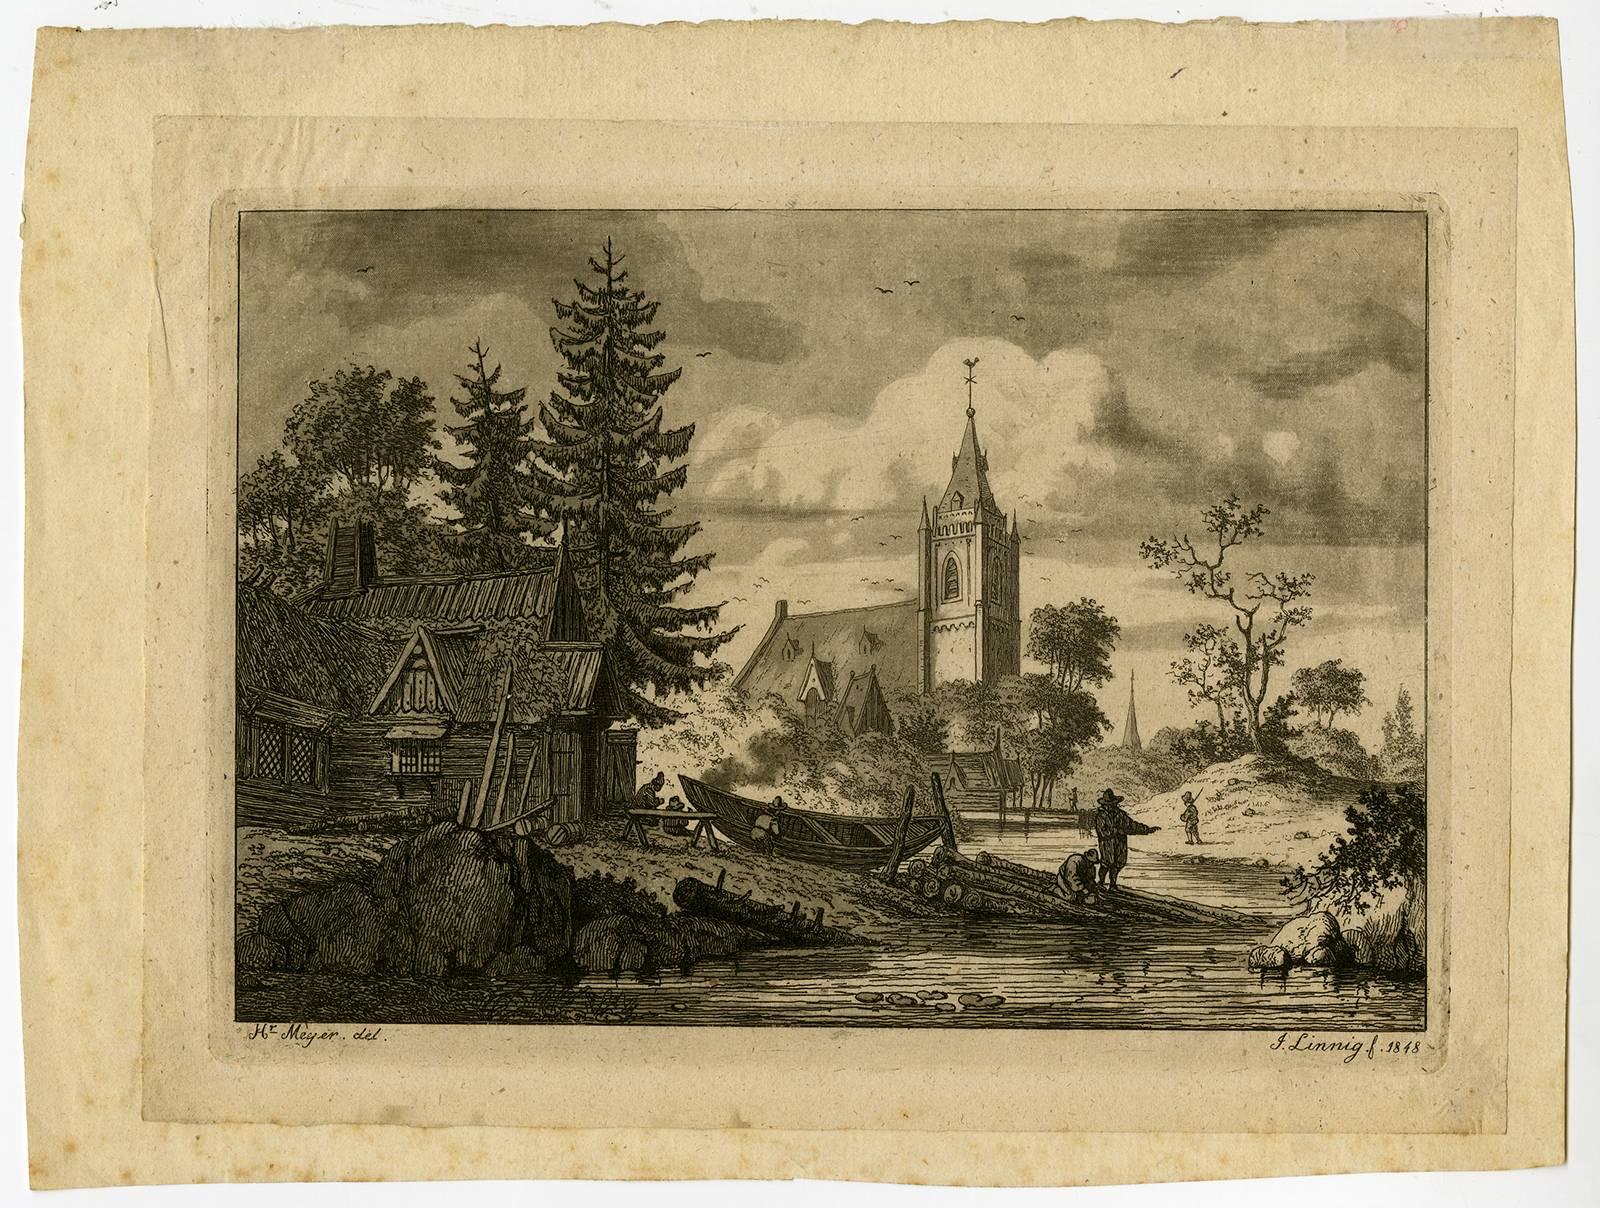 Egidius Linnig Landscape Print - Untitled - View of a village with a church.